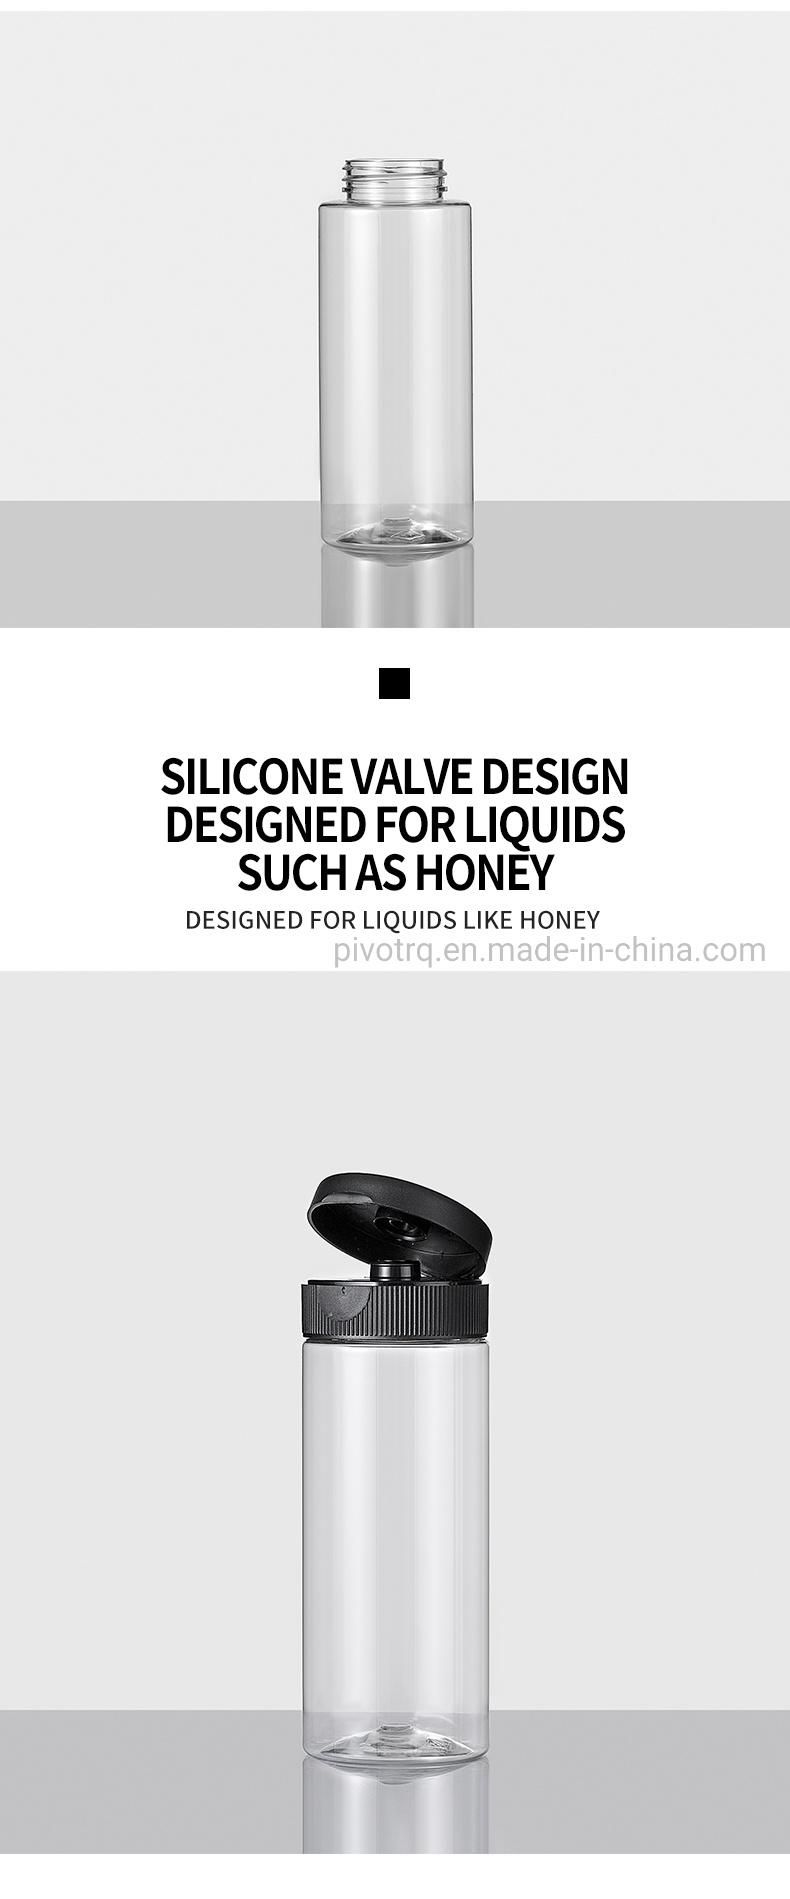 500g 340g Plastic Pet Honey Bottle with Silicone Valve Cap for Honey